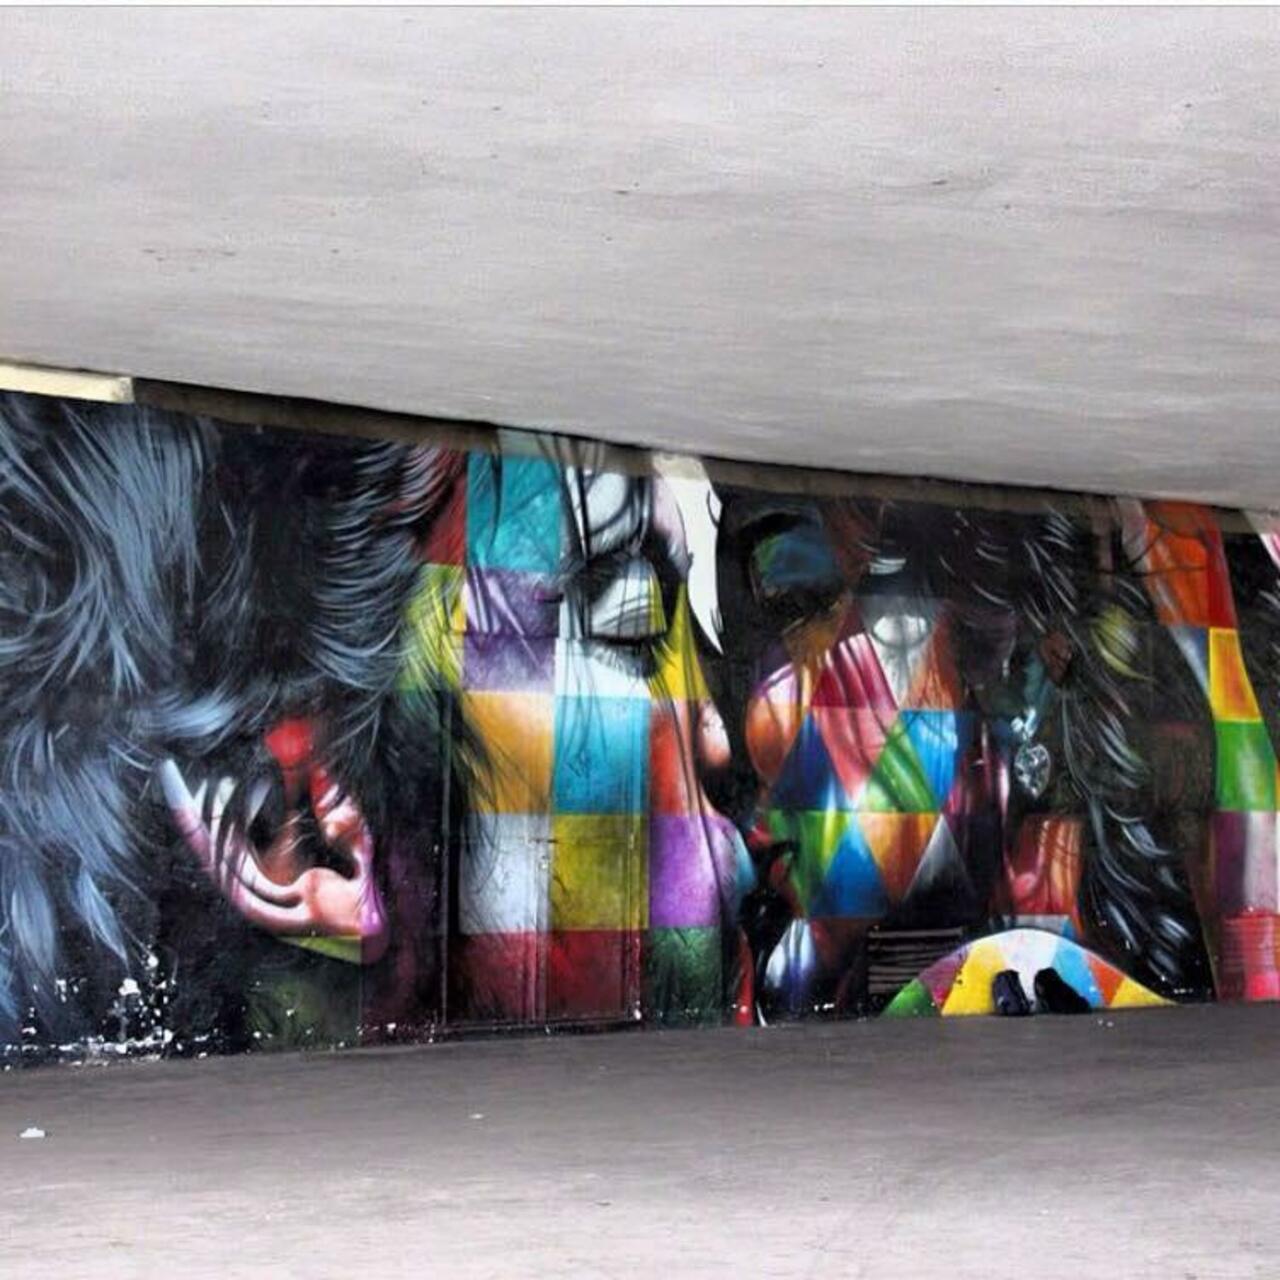 New Street Art by the brilliant Eduardo Kobra 

#art #mural #graffiti #streetart http://t.co/VQqevvomFj